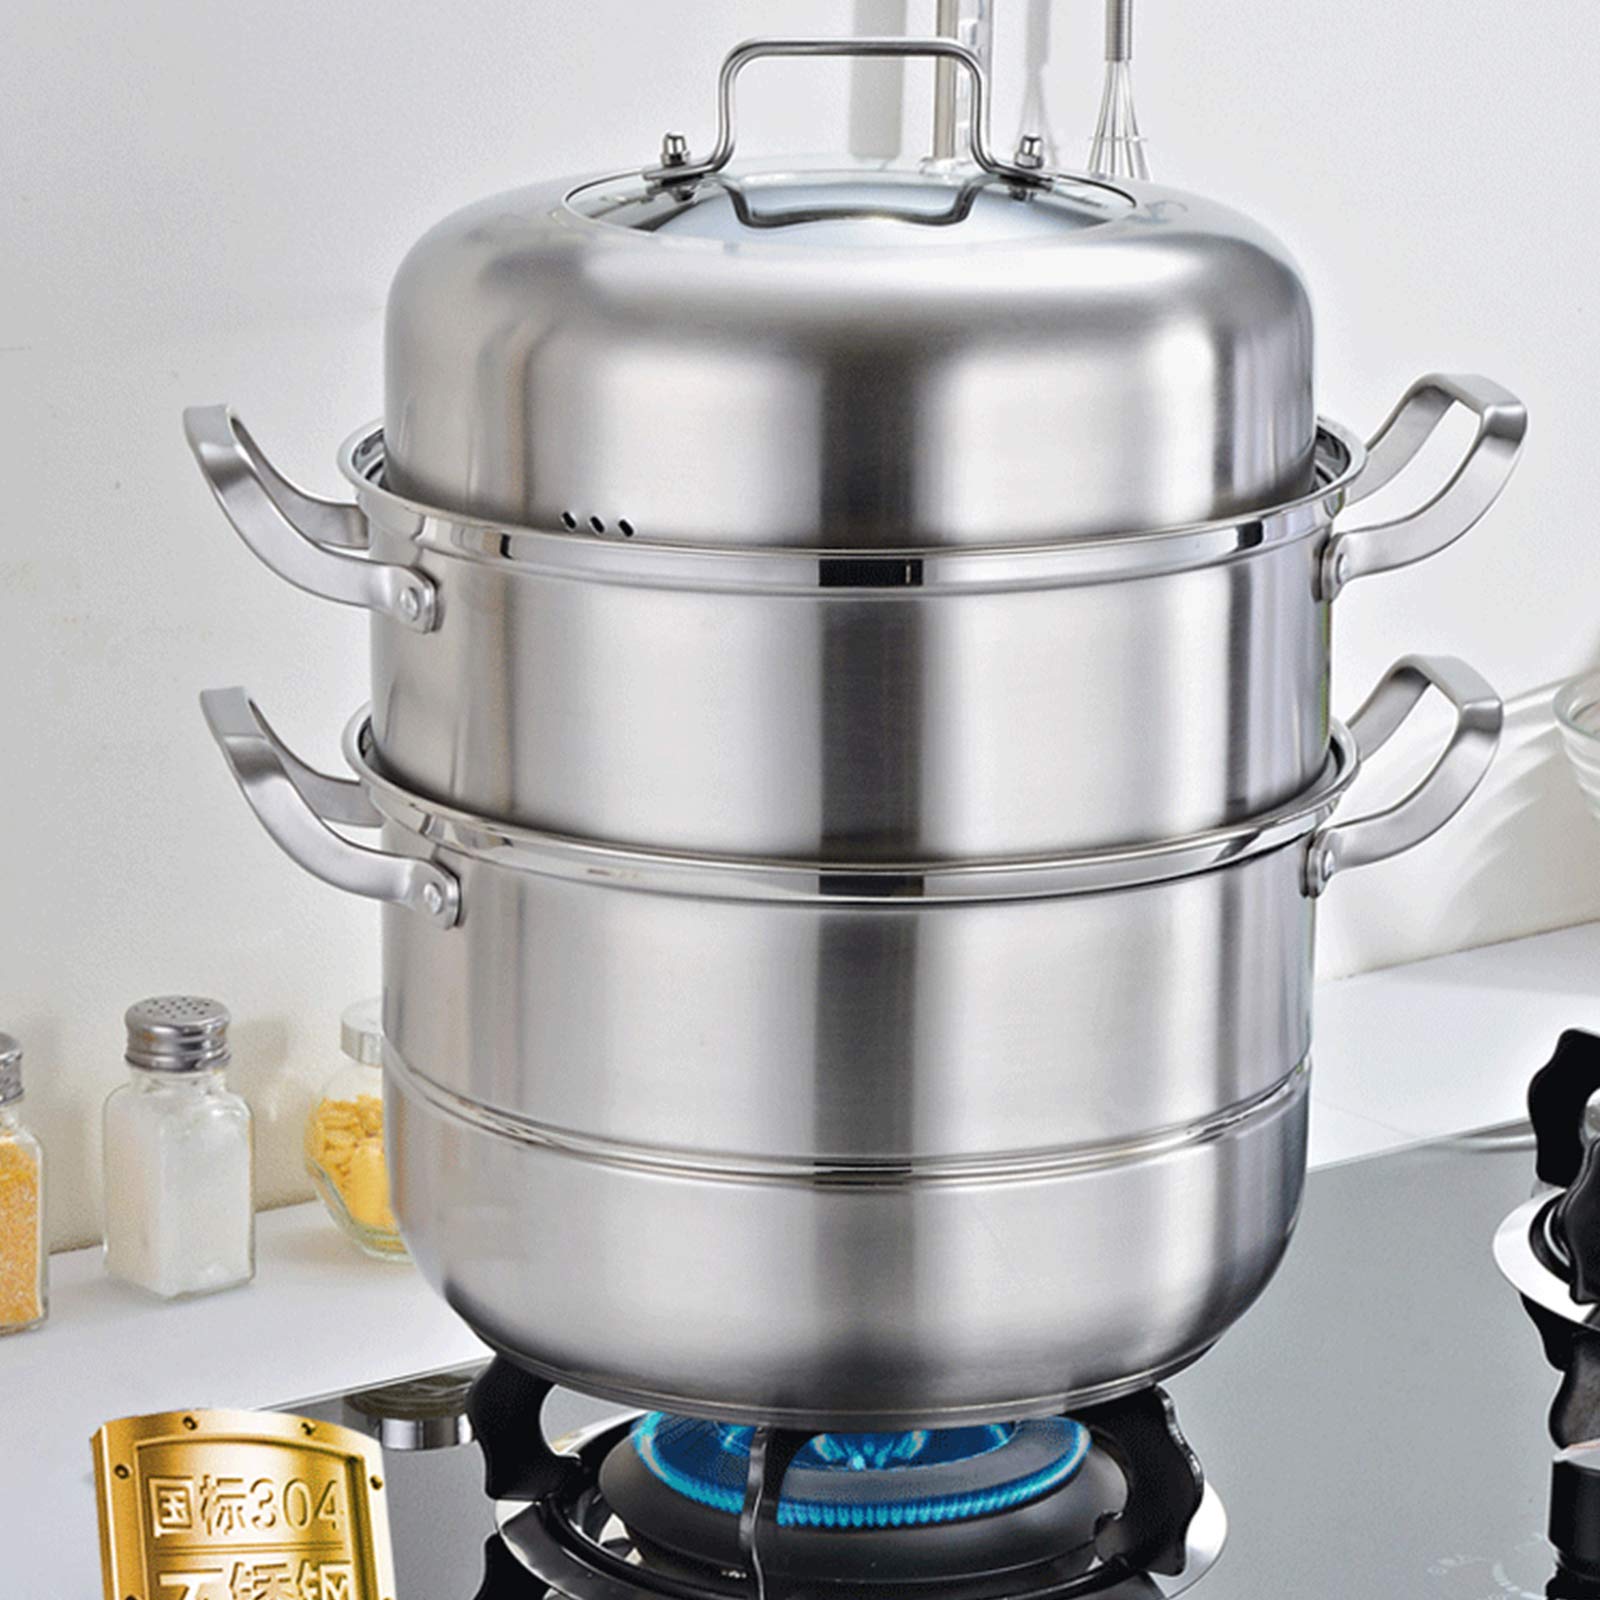 Stainless Steel Steamer Pot - 3 Tier